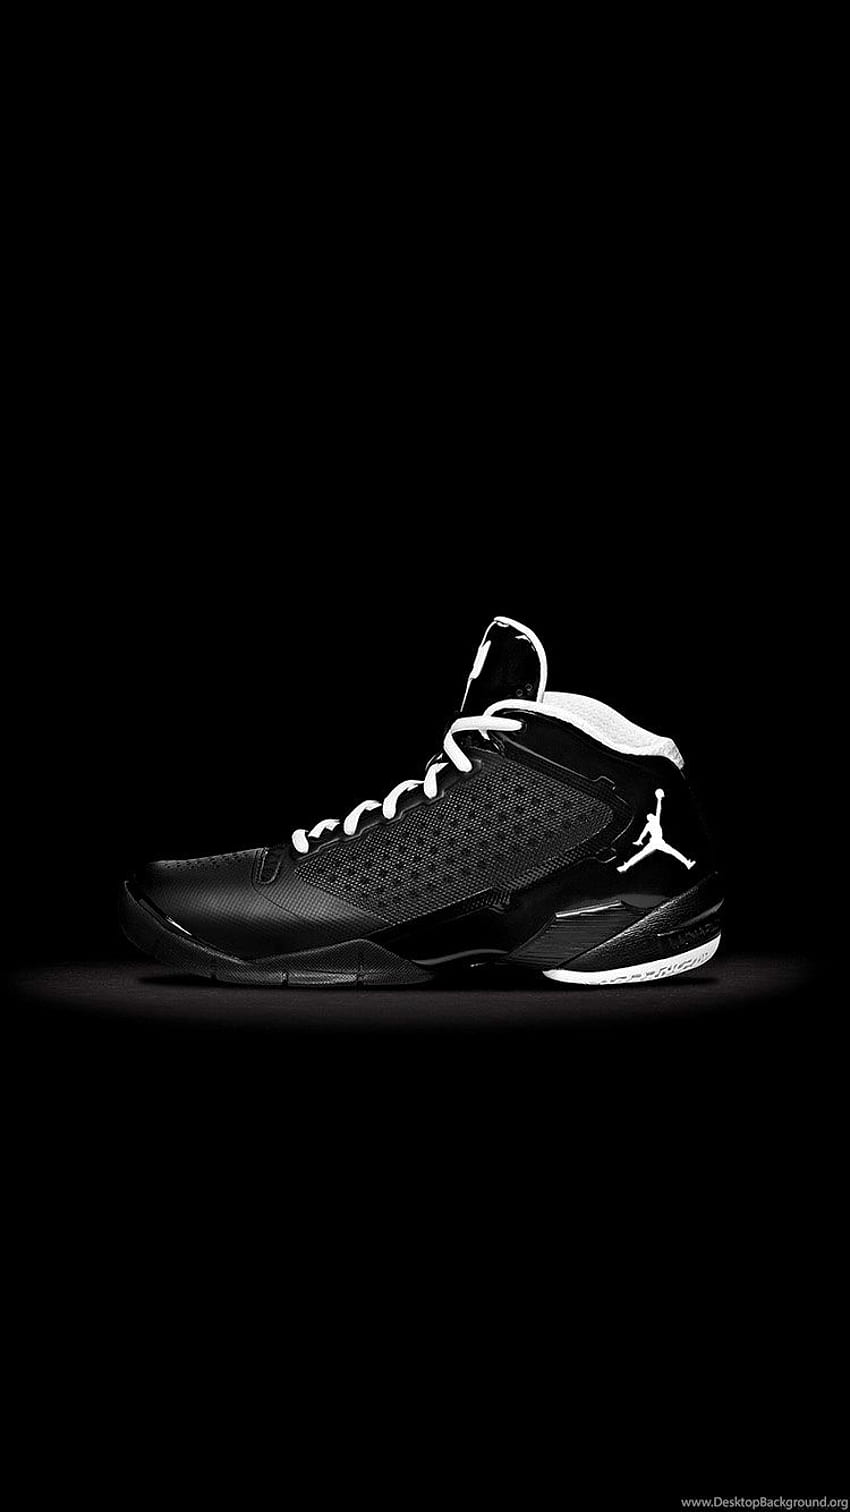 Sepatu Jordan Fly Wade Nike iPhone 6 / IPod, Retro Jordan wallpaper ponsel HD